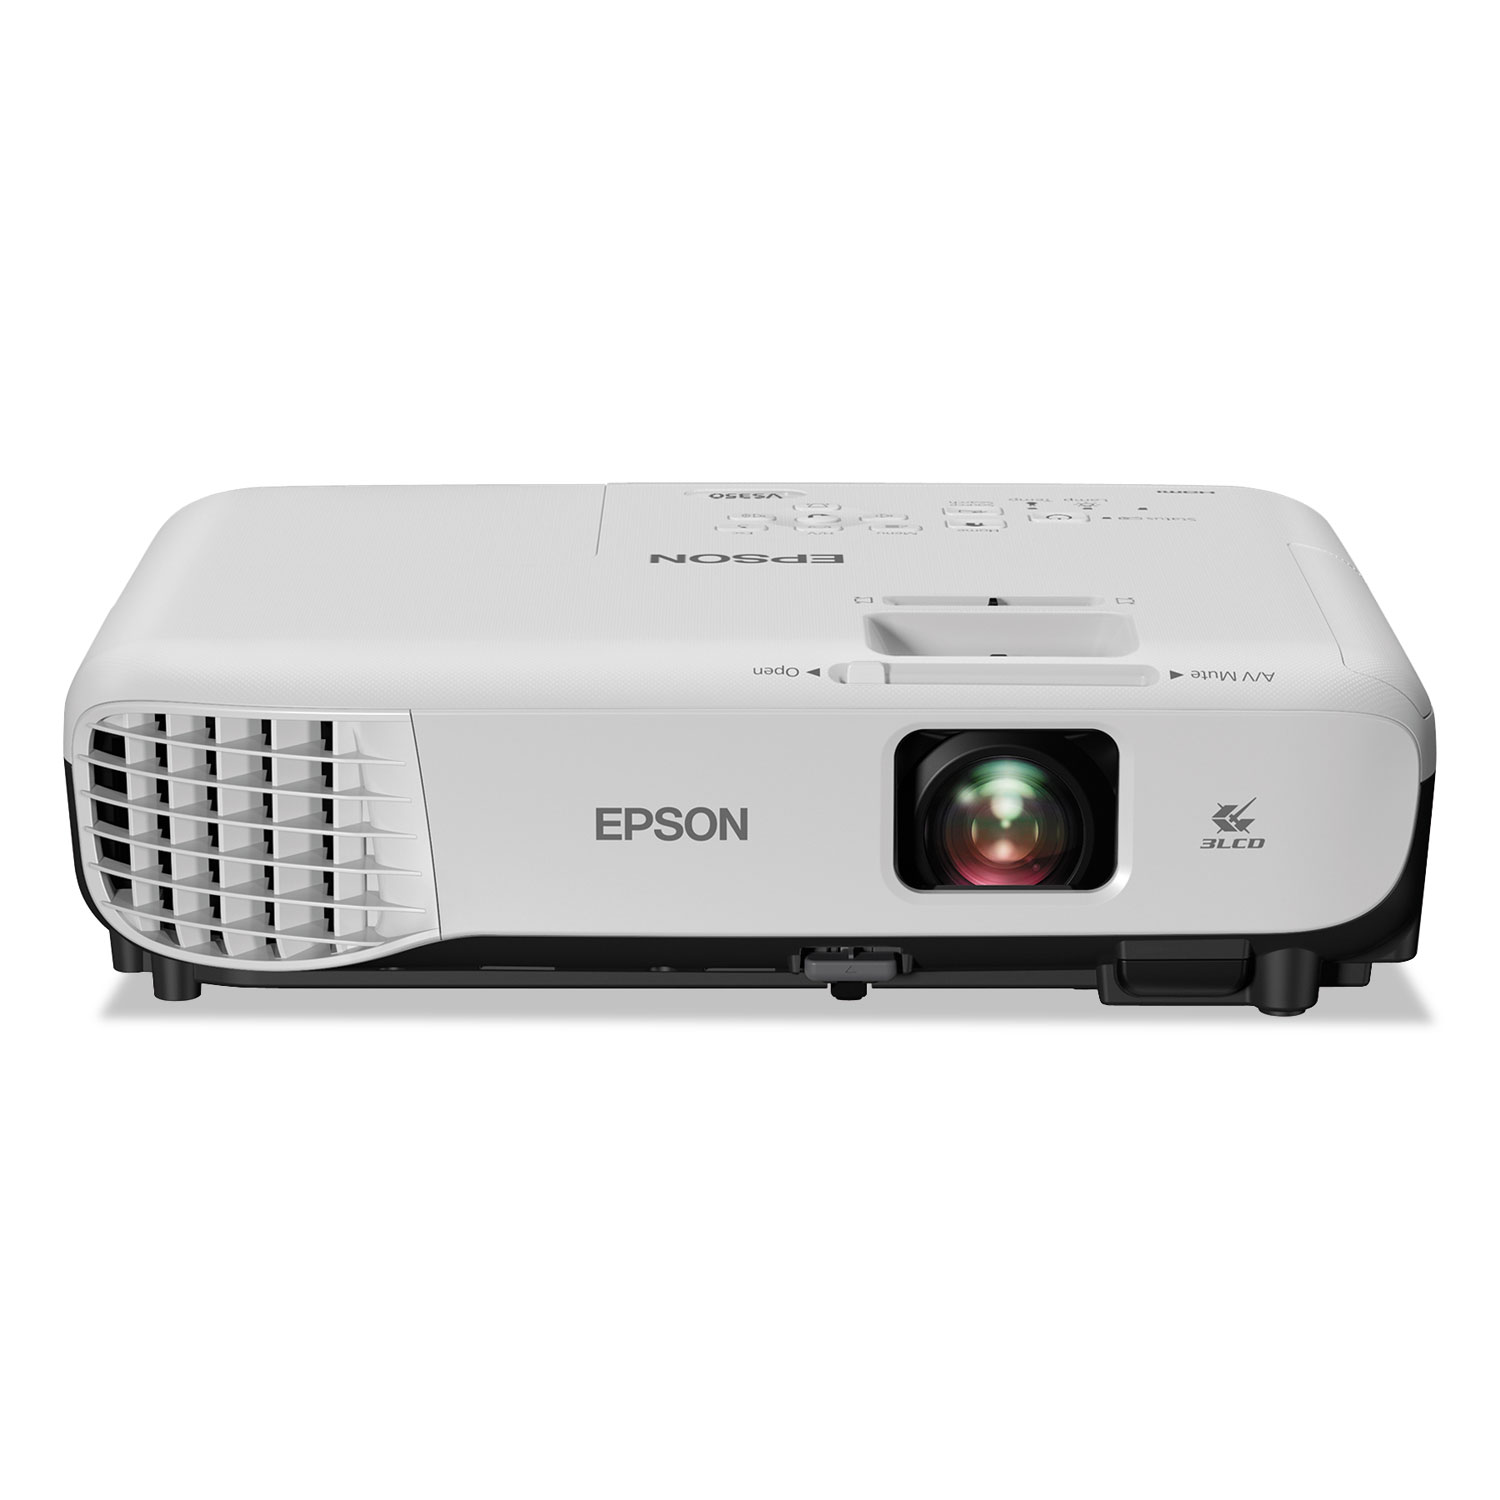  Epson V11H839220 VS350 XGA 3LCD Projector, 3,300 lm, 1024 x 768 Pixels, 1.2x Zoom (EPSV11H839220) 